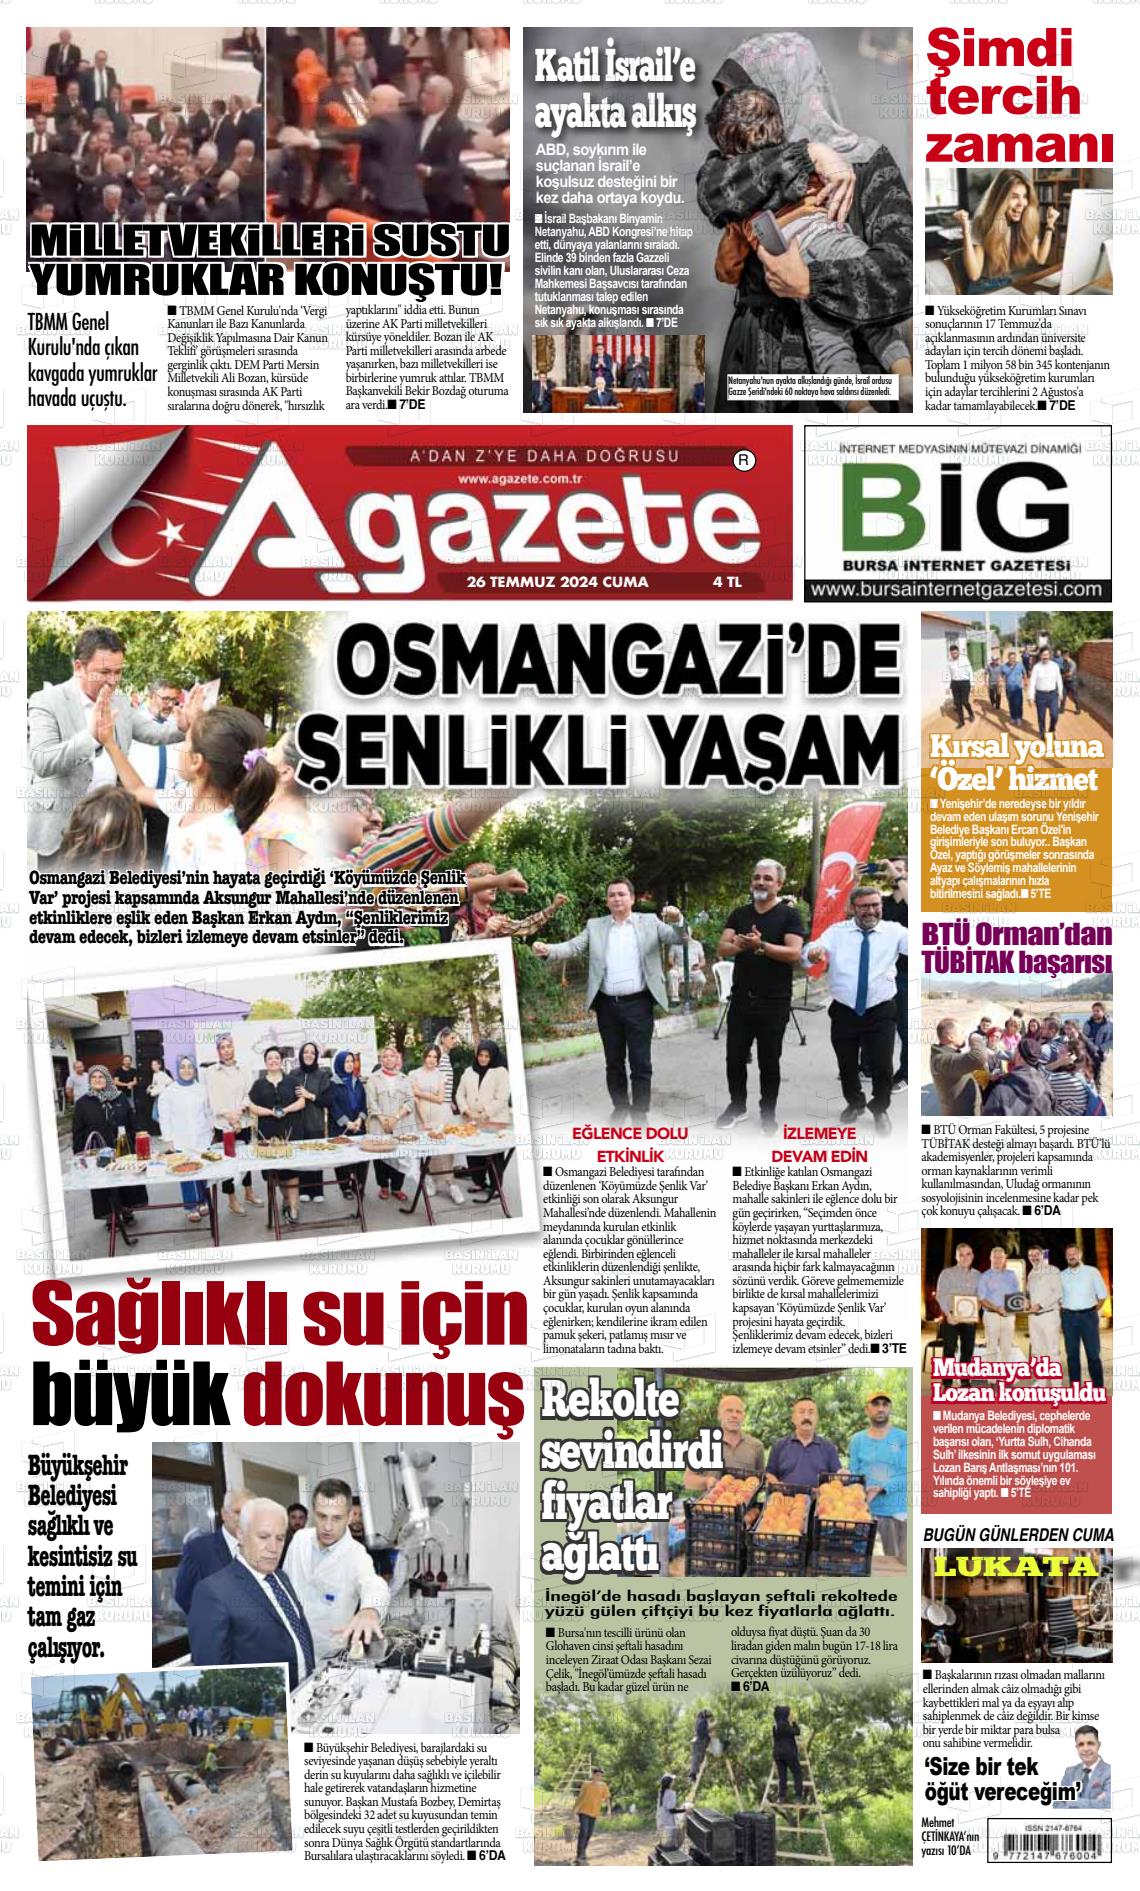 27 Temmuz 2024 a gazete Gazete Manşeti